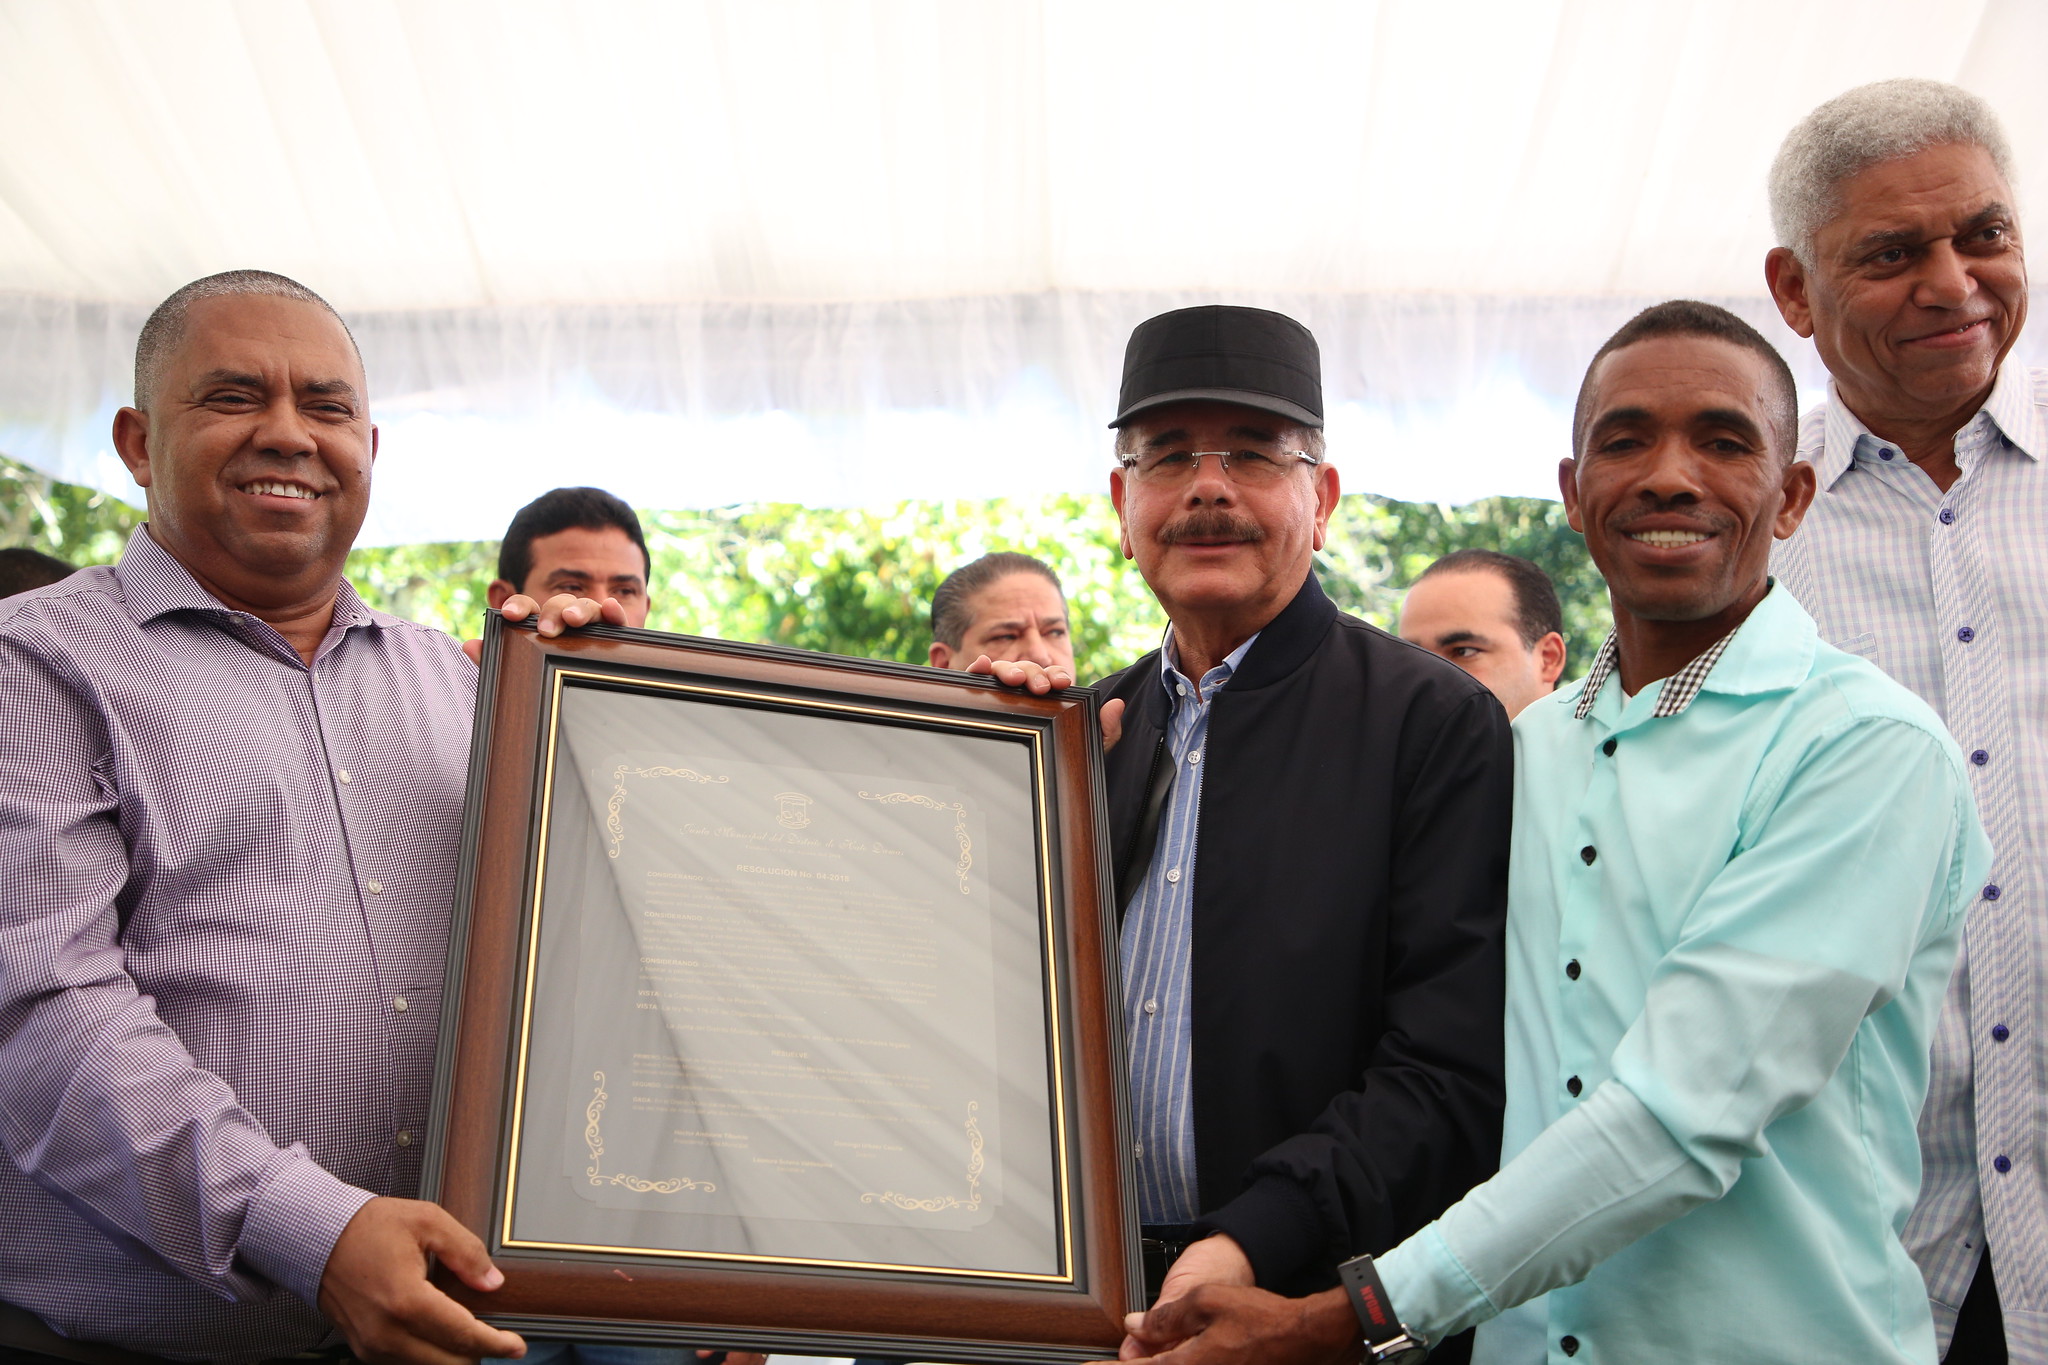 REPÚBLICA DOMINICANA: Parceleros de Cambita Garabitos recibirán apoyo para fomentar cacao, café y aguacate. Danilo Medina asume compromisos en Visita Sorpresa